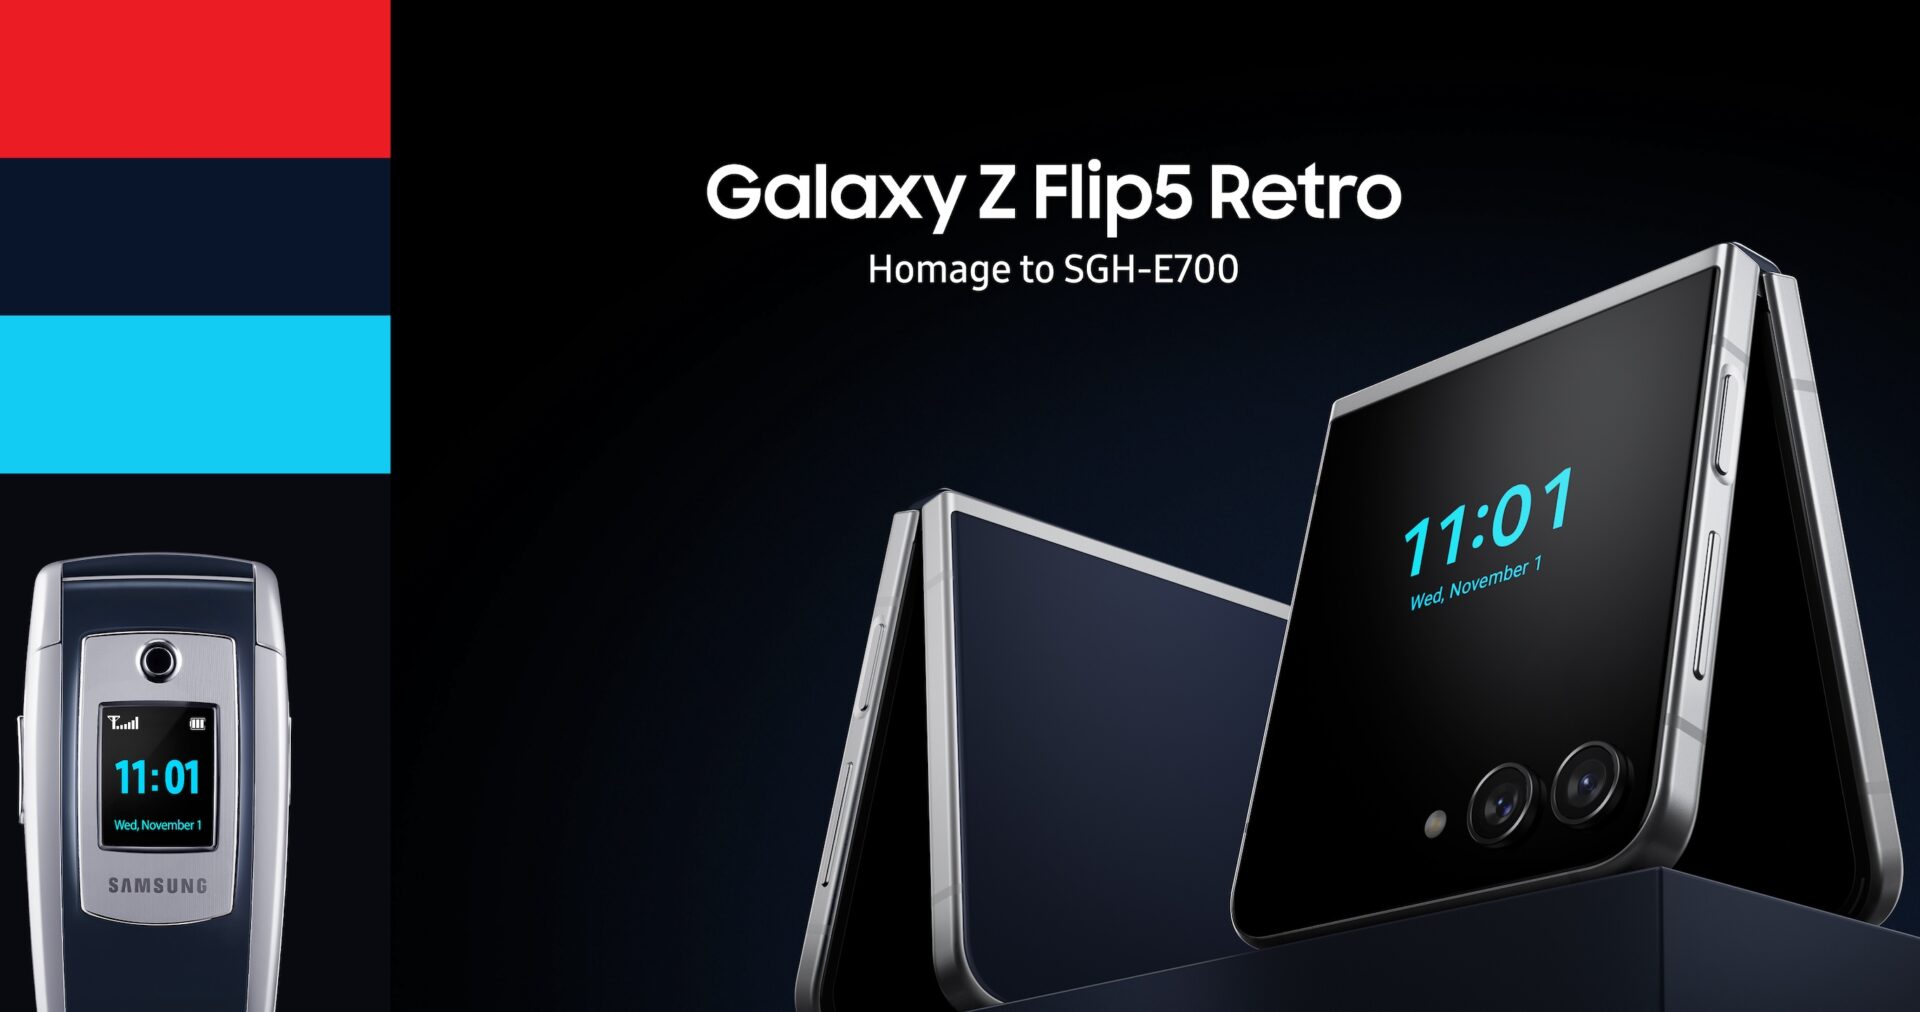 Galaxy Z Flip 5 Retro firar klassisk flipmobil